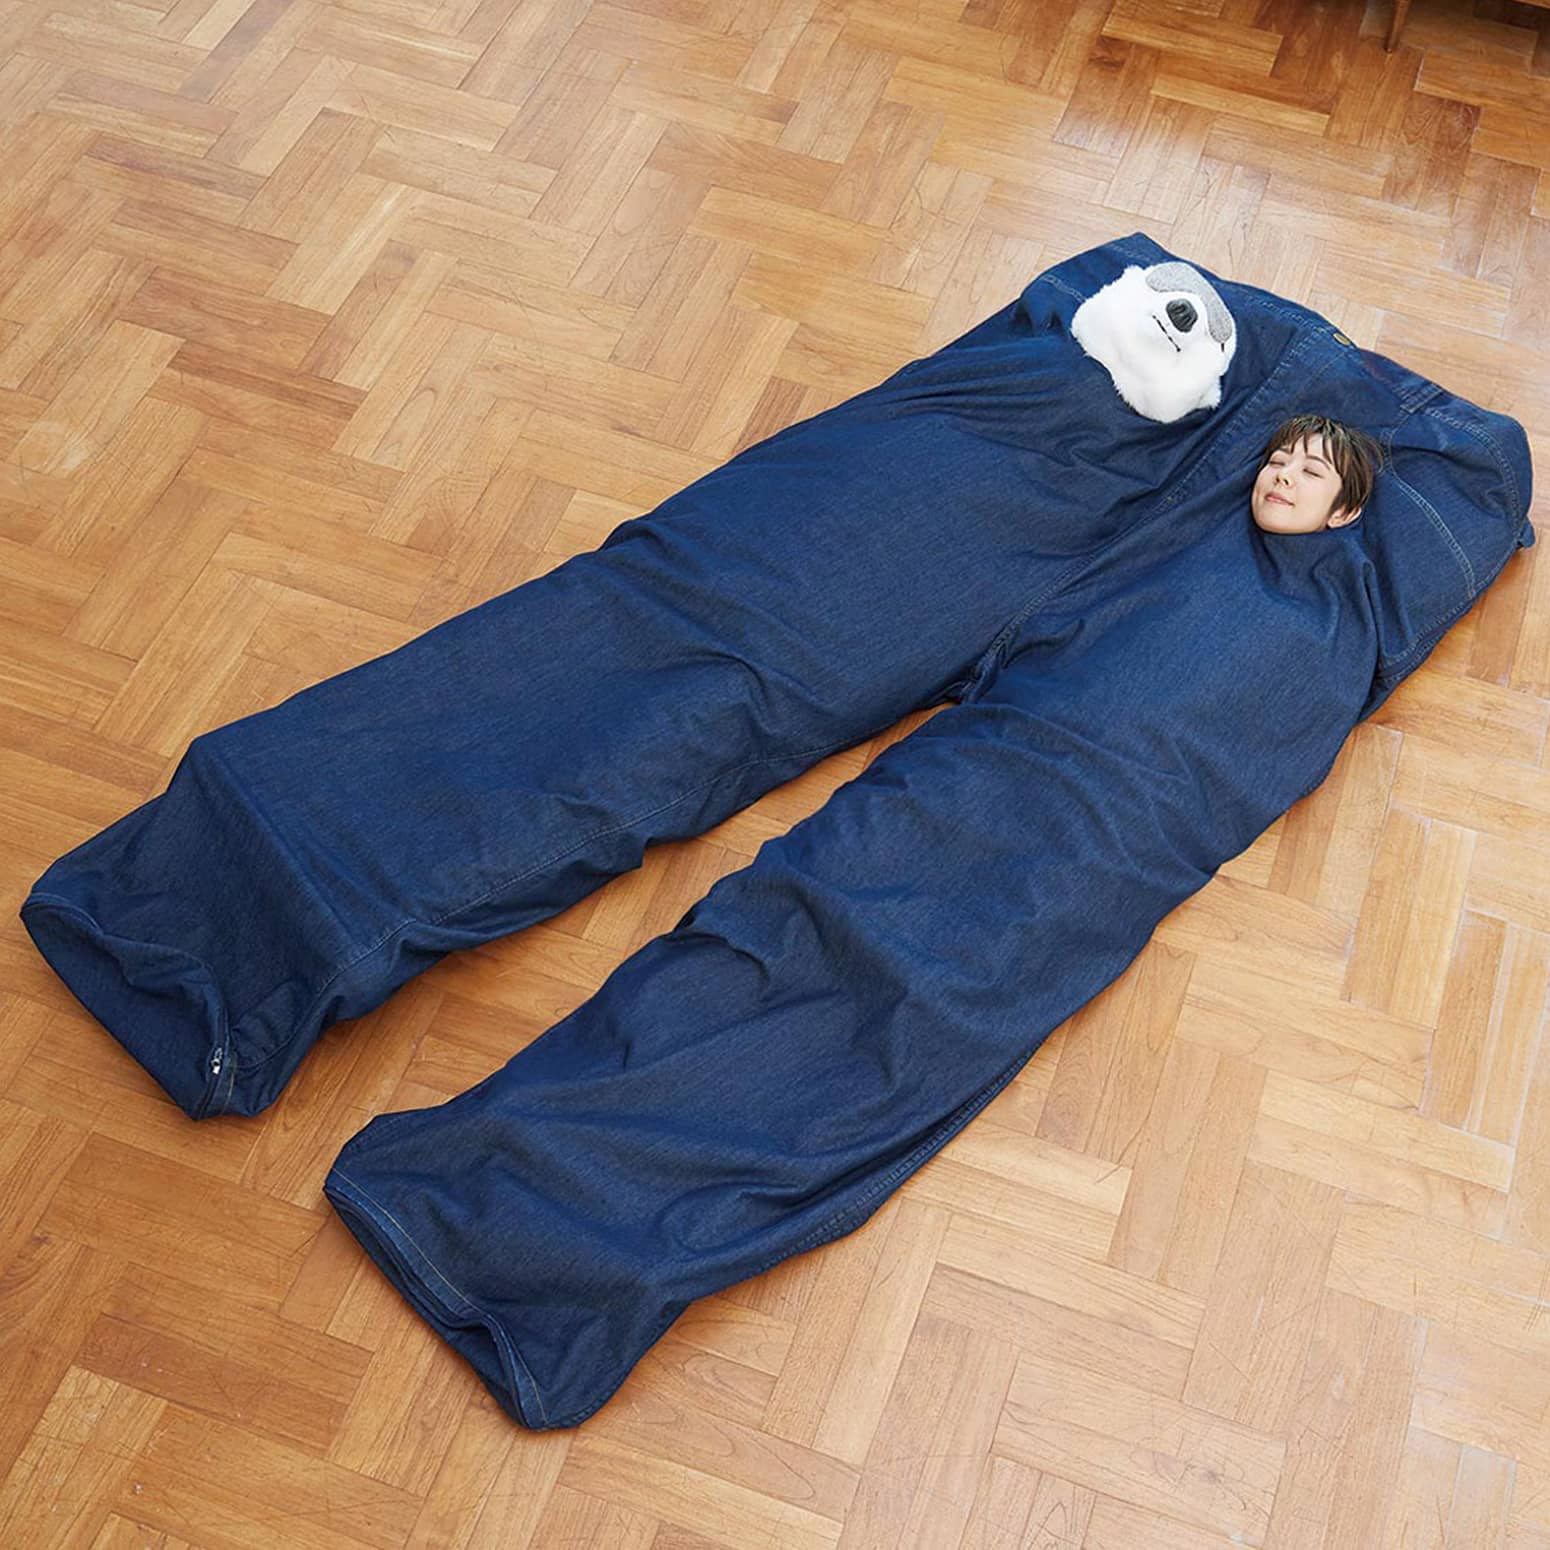 Gigantic Pants Sleeping Bag For Two